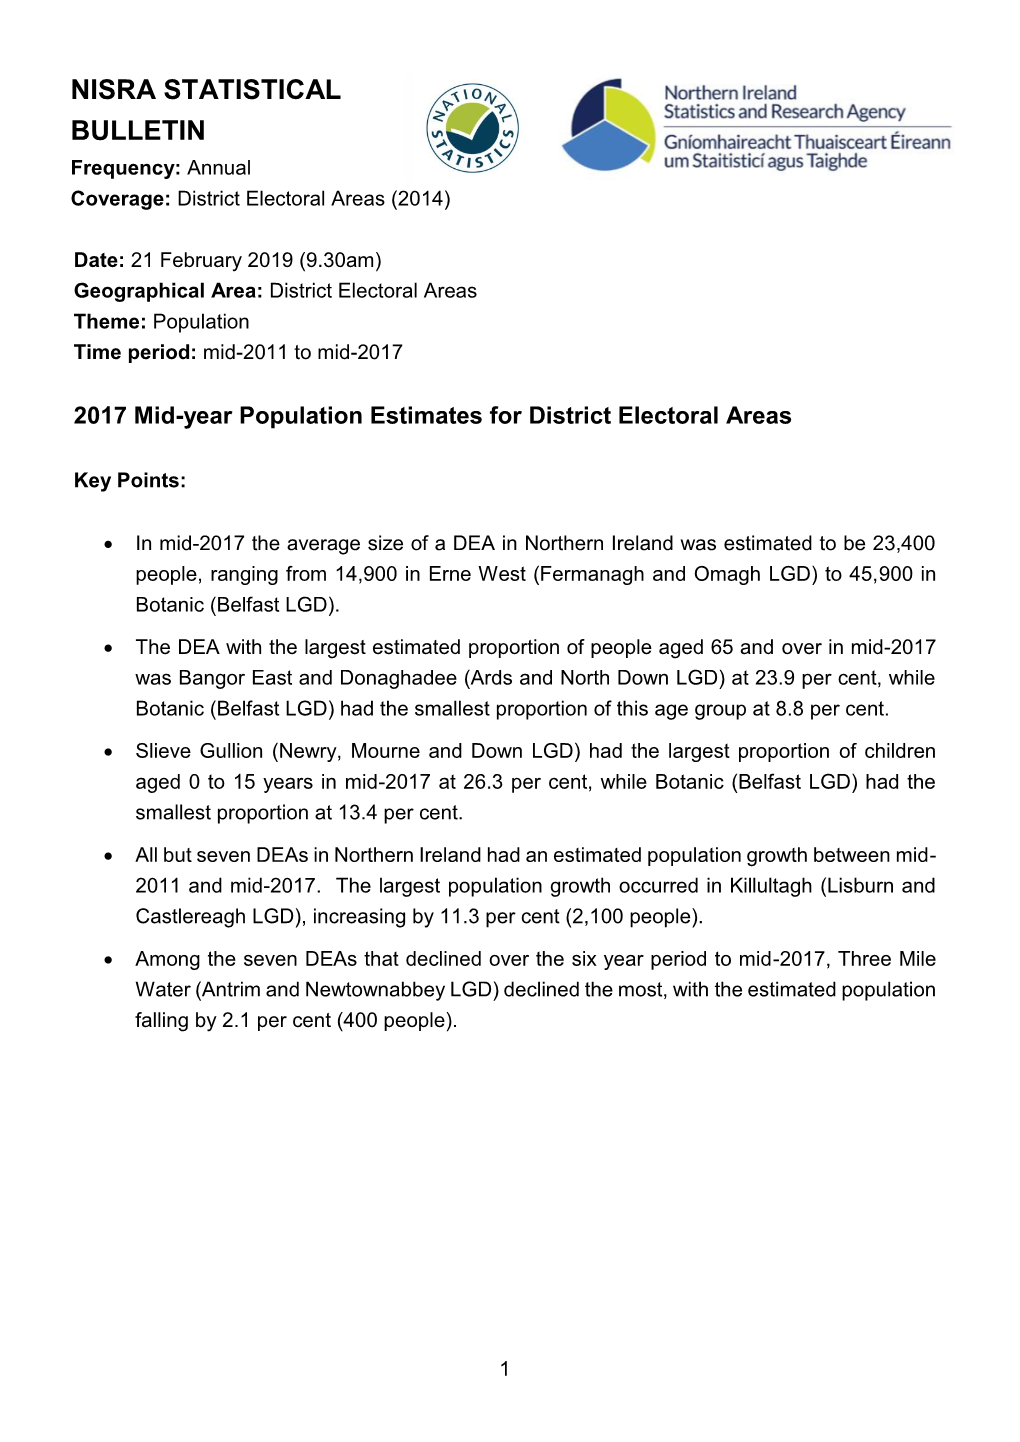 2017 Mid-Year Population Estimates for District Electoral Areas